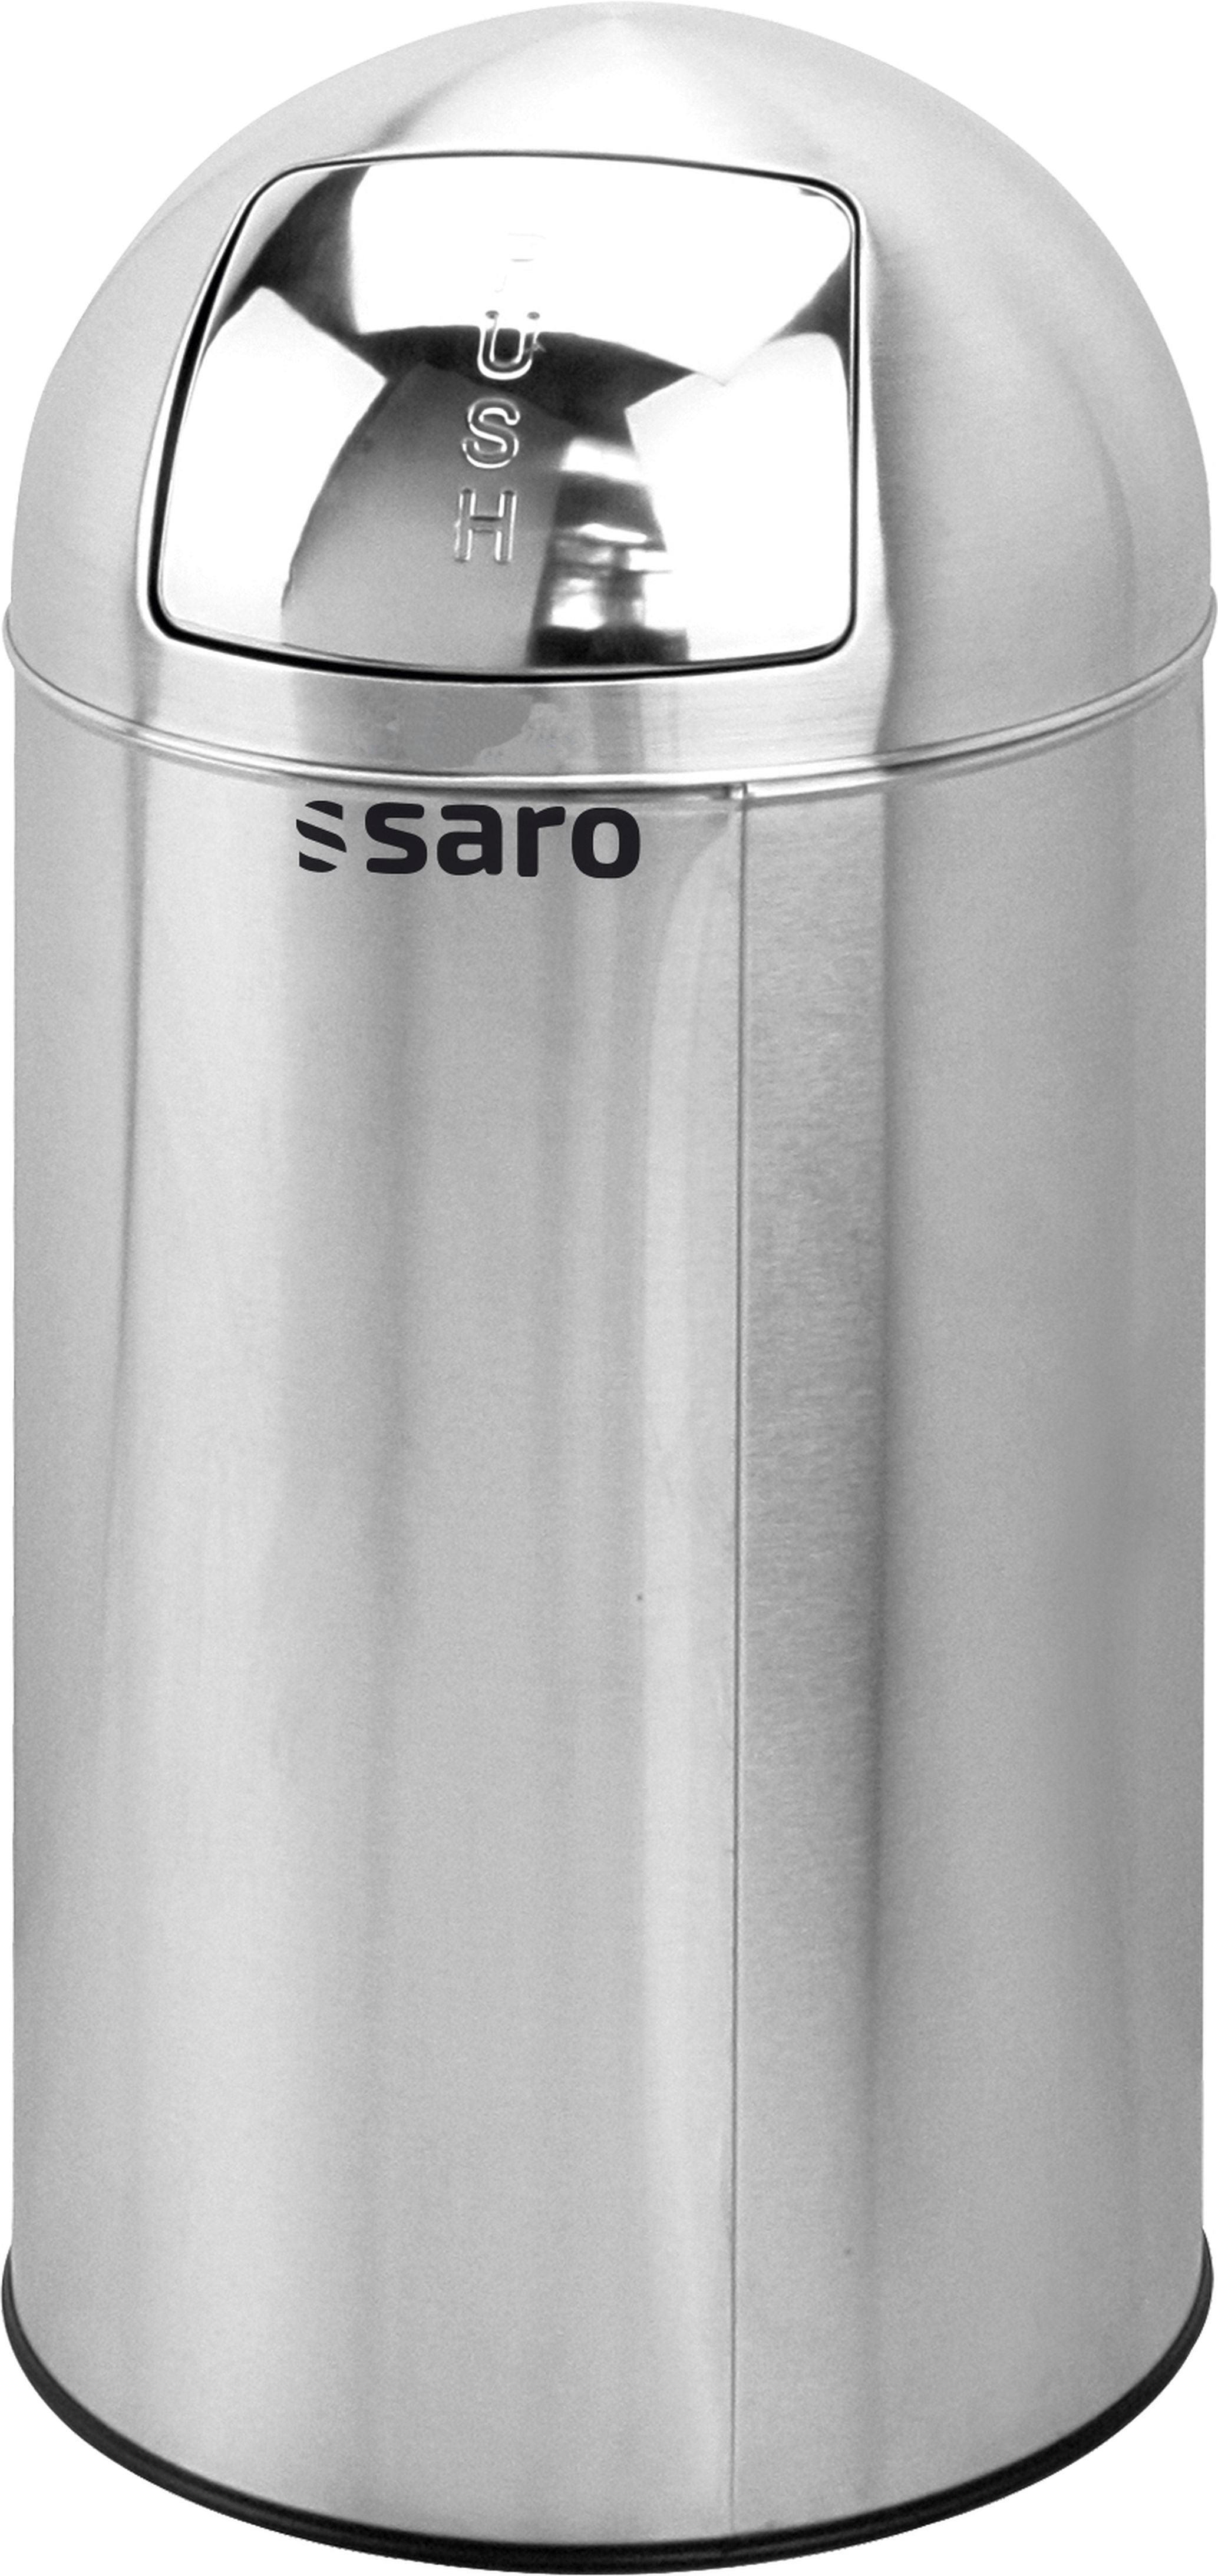 Se SARO Skraldespand med skubbelåg model AD 253 hos Maxigastro.com